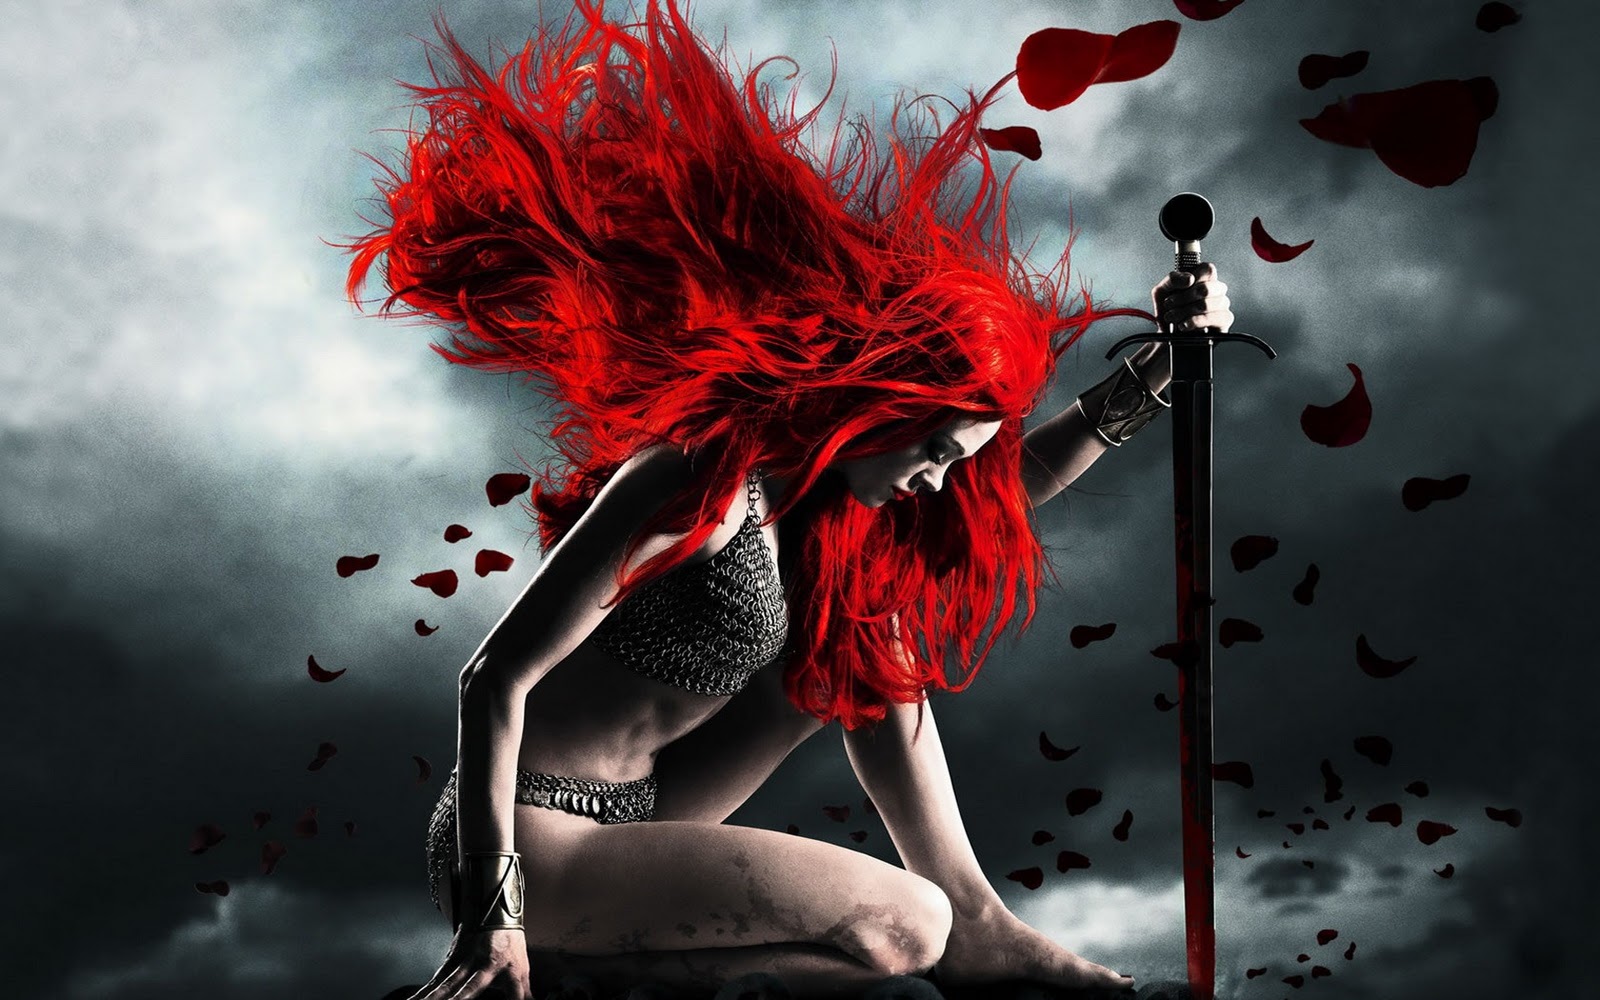 https://blogger.googleusercontent.com/img/b/R29vZ2xl/AVvXsEiLuUvg5jMhlQN7O-_ozKoMMC8GUgnYrLaAkQqq5kSRcsbEqzt2VeL30IRyg5ISW1QvmmWwktB2XmarCC30o87YzhJKK1xnMyWFNwwr0OJXn601OkNnVrVhOdWTXWHOXL4wCpRRmIvXgEw/s1600/super+warrior+girl+red+hair+hd+wallpaper.jpg